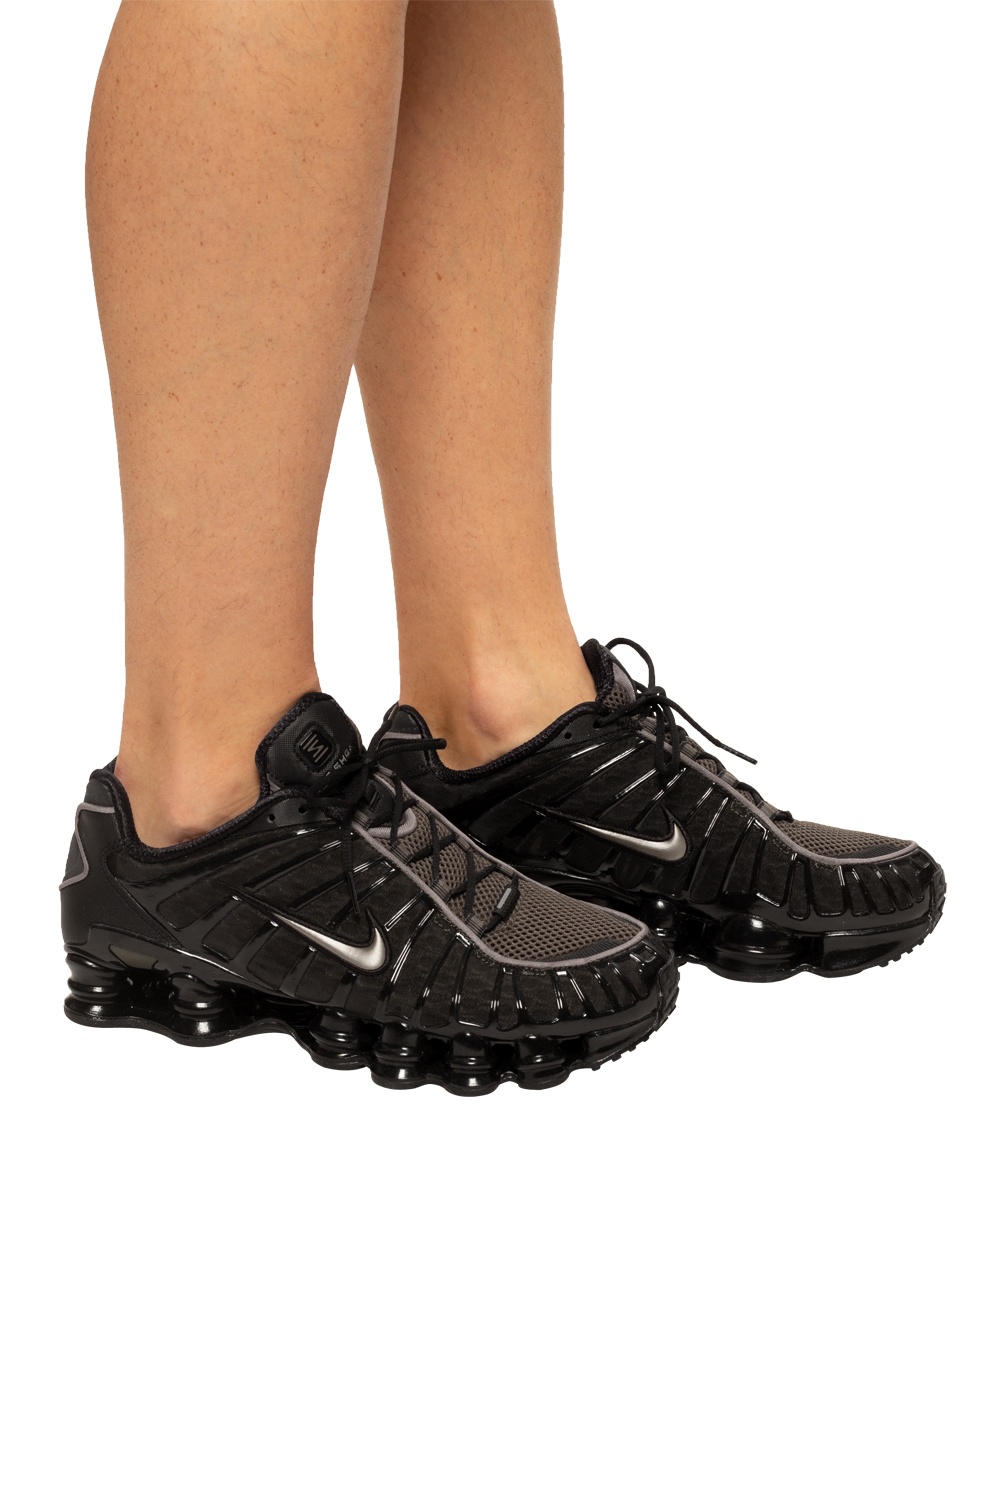 Nike 'Shox sneakers | Men's Shoes | Vitkac